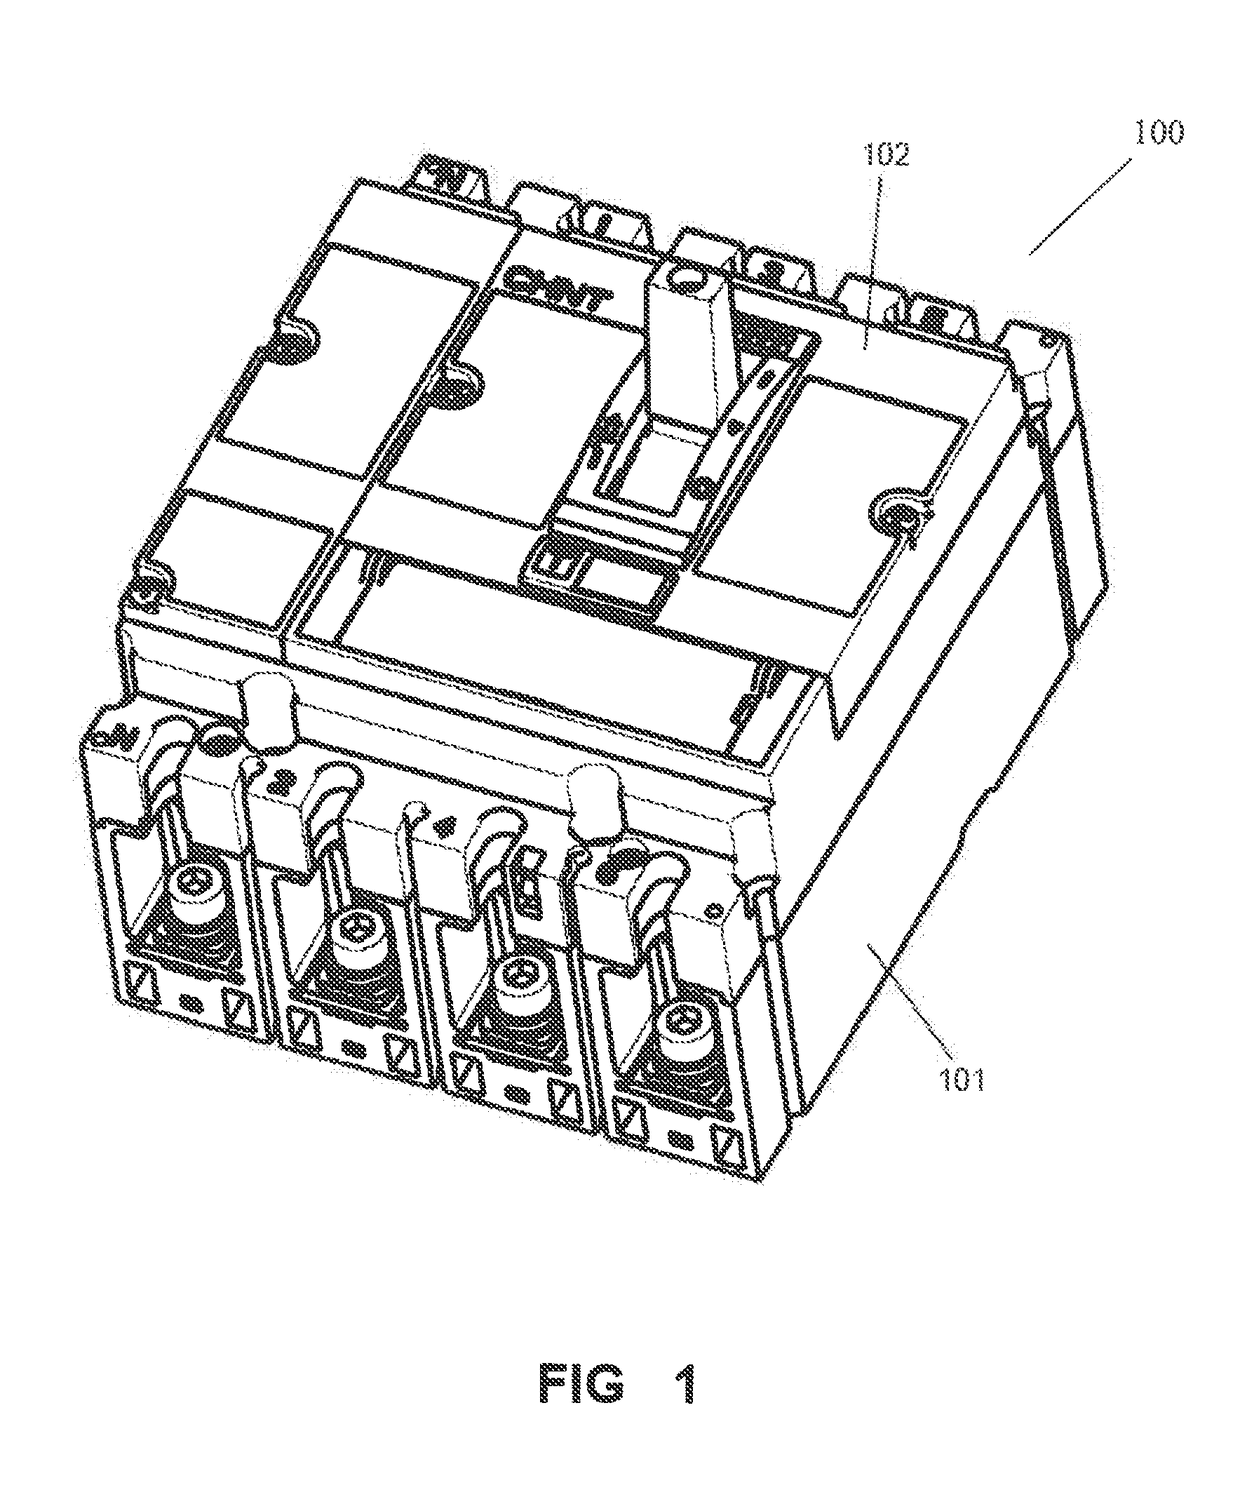 Contact module for circuit breaker